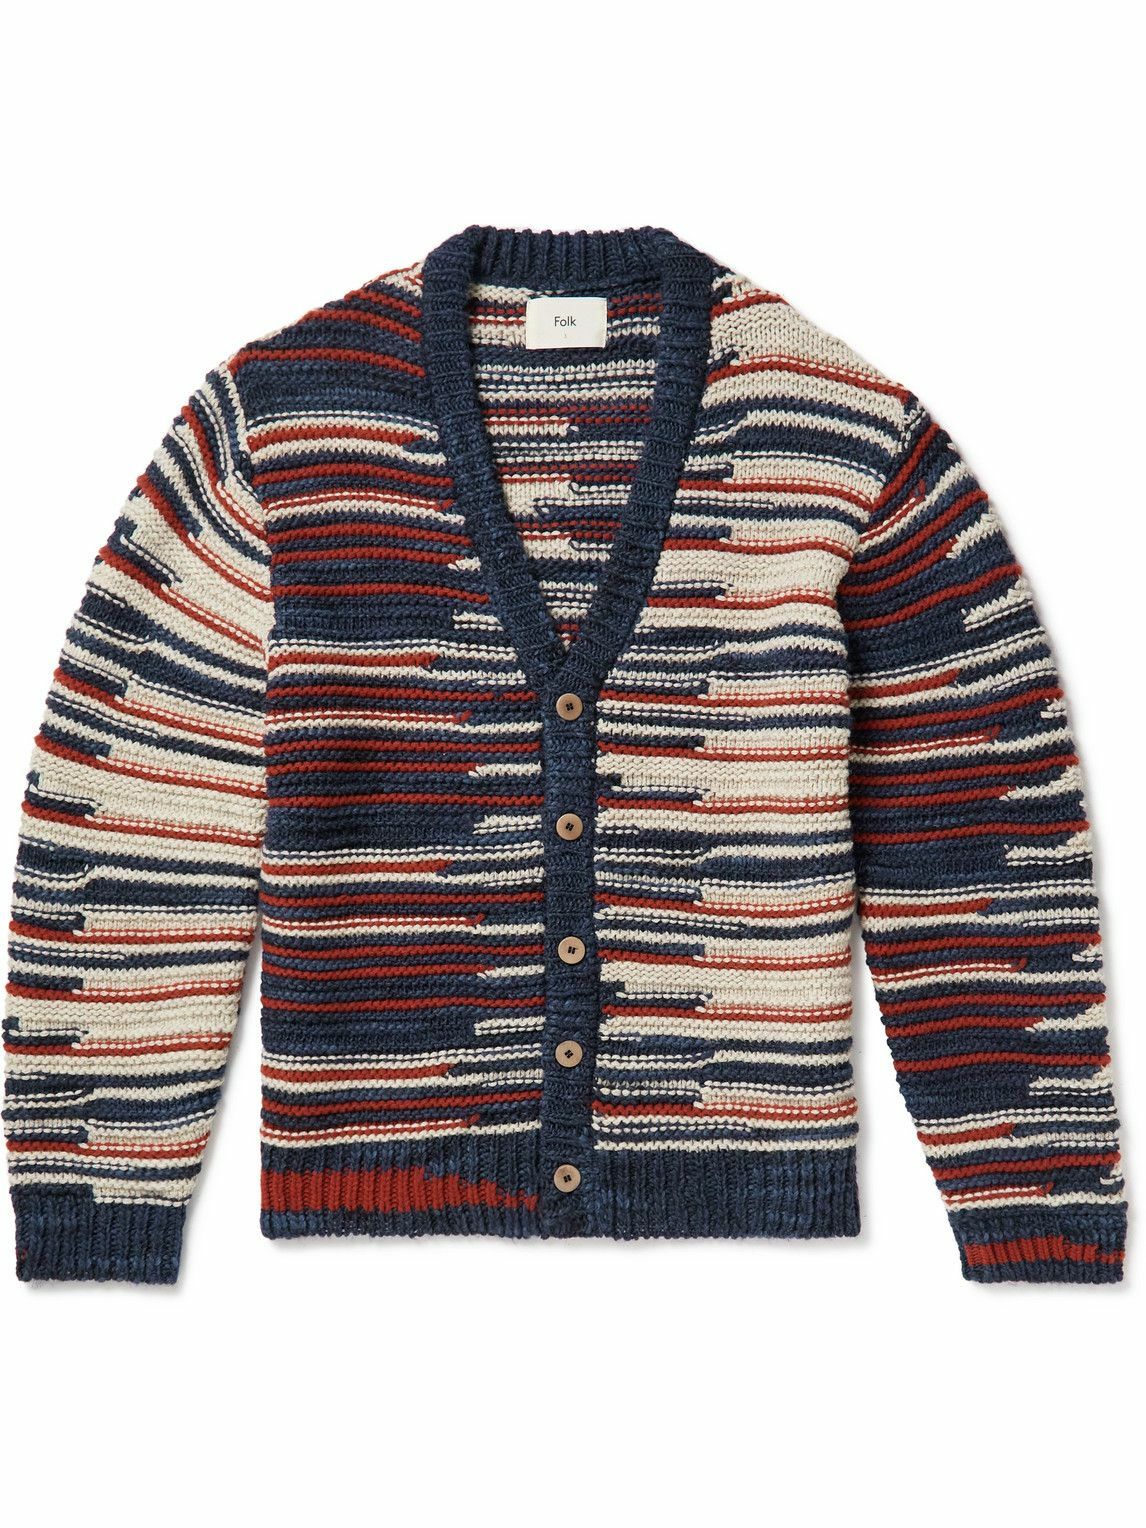 Folk - Striped Intarsia-Knit Cardigan - Multi Folk